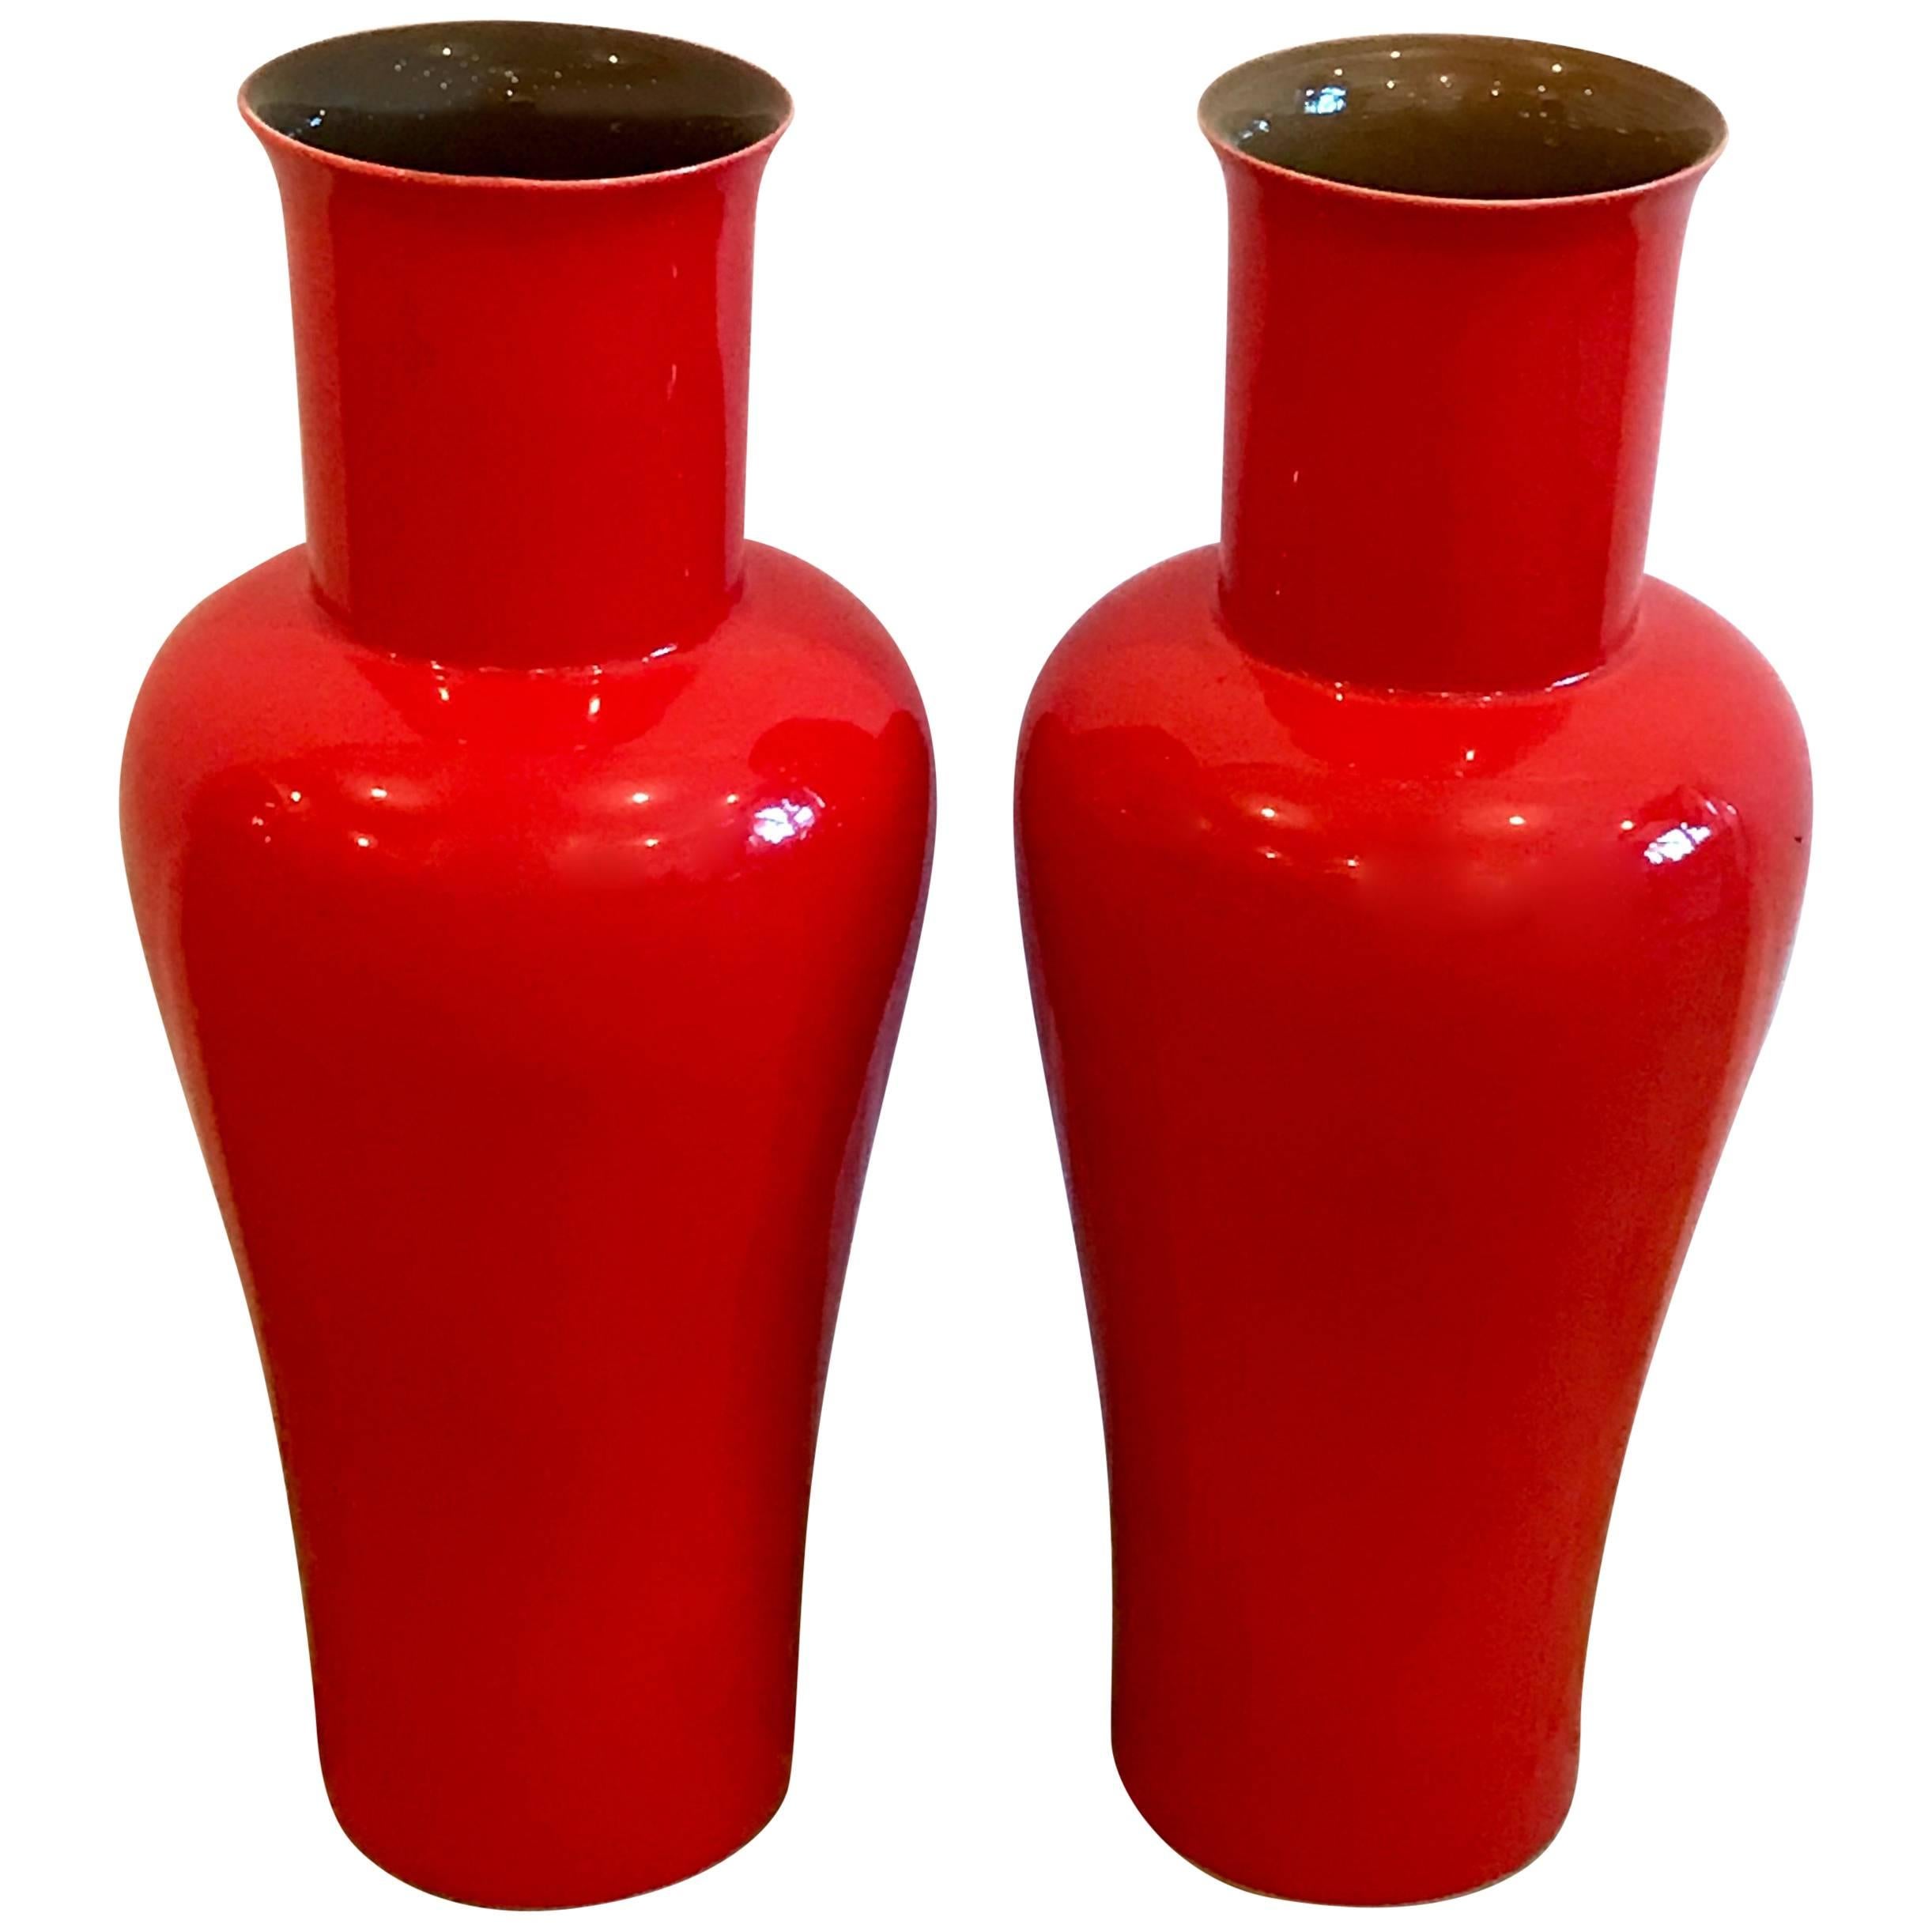 Pair of Red Porcelain Ceramic Vases by Artist Bo Jai for Middle Kingdom, Signed